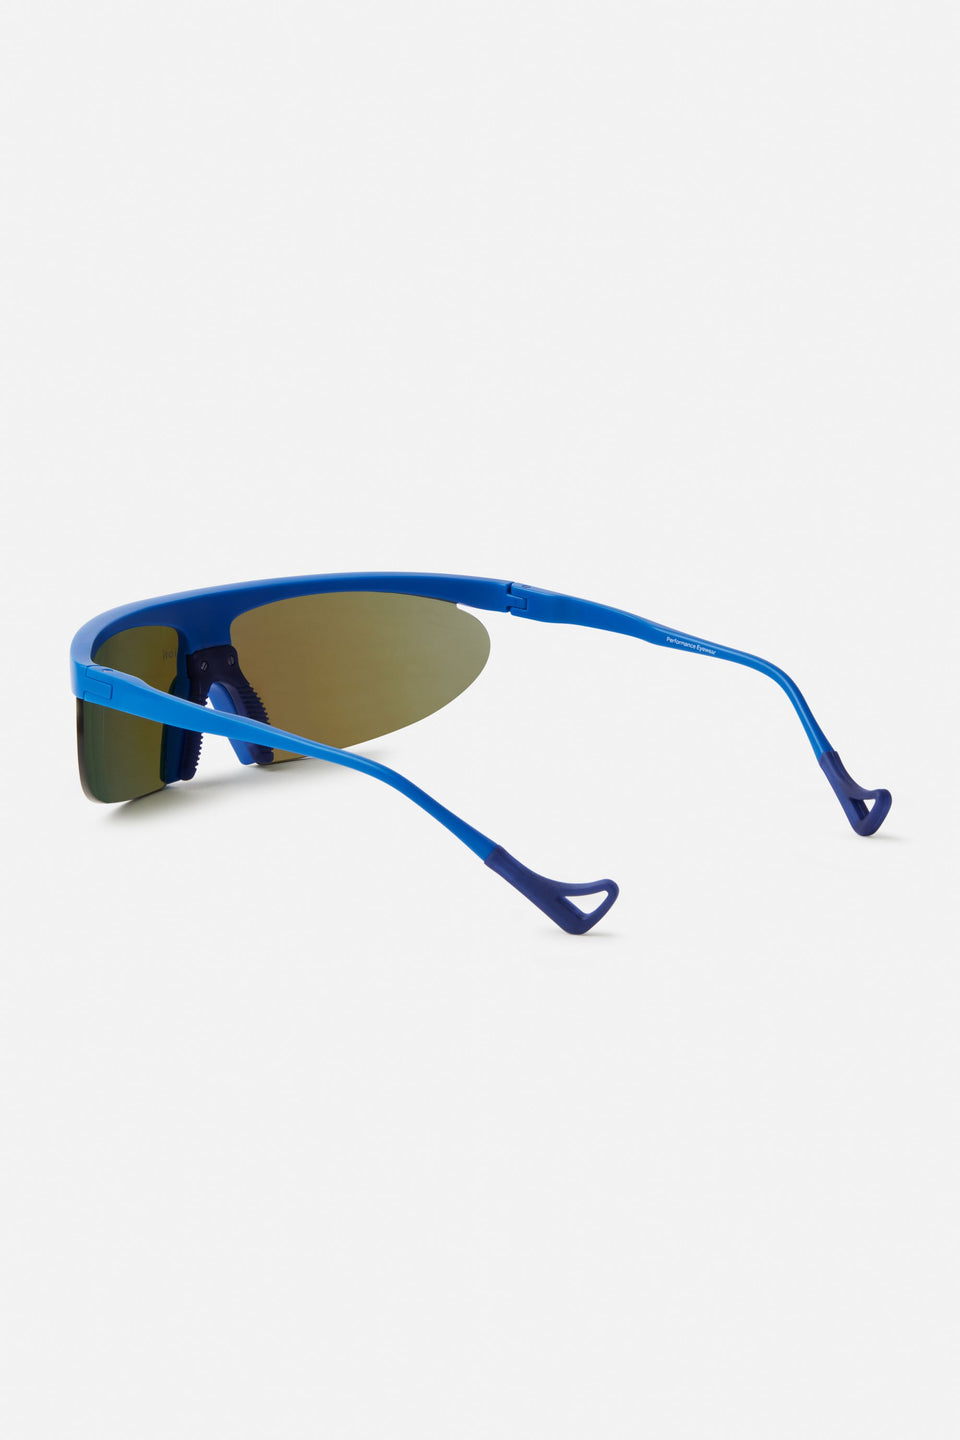 District Vision Trail Running Sunglasses Los Angeles Koharu Eclipse Metallic Blue D+ Aqua Mirror FW23 Calculus Victoria BC Canada